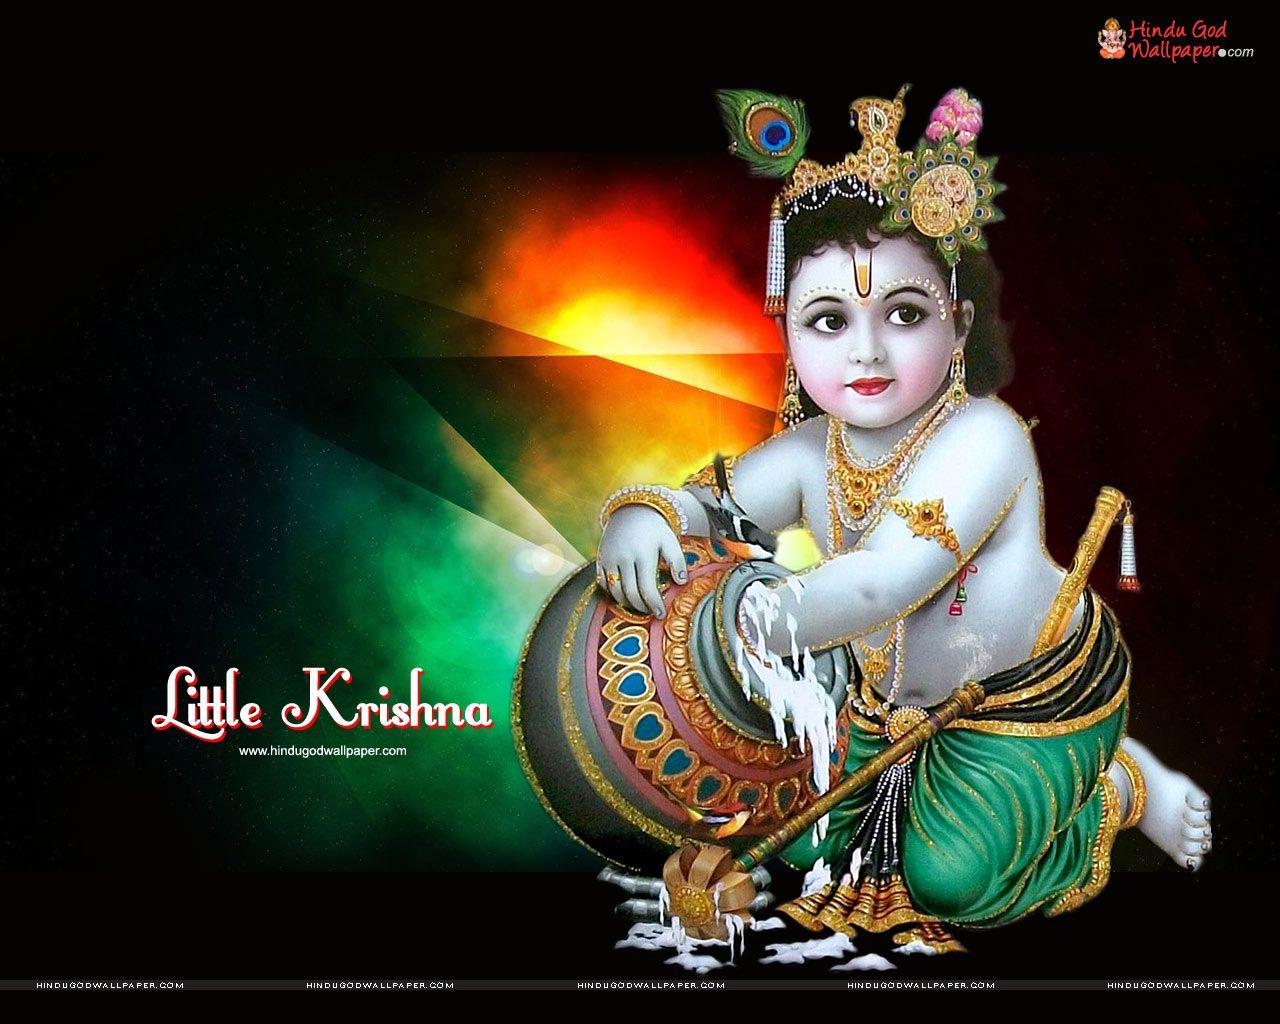 Cute Bal Krishna Wallpaper Free Download. Krishna wallpaper